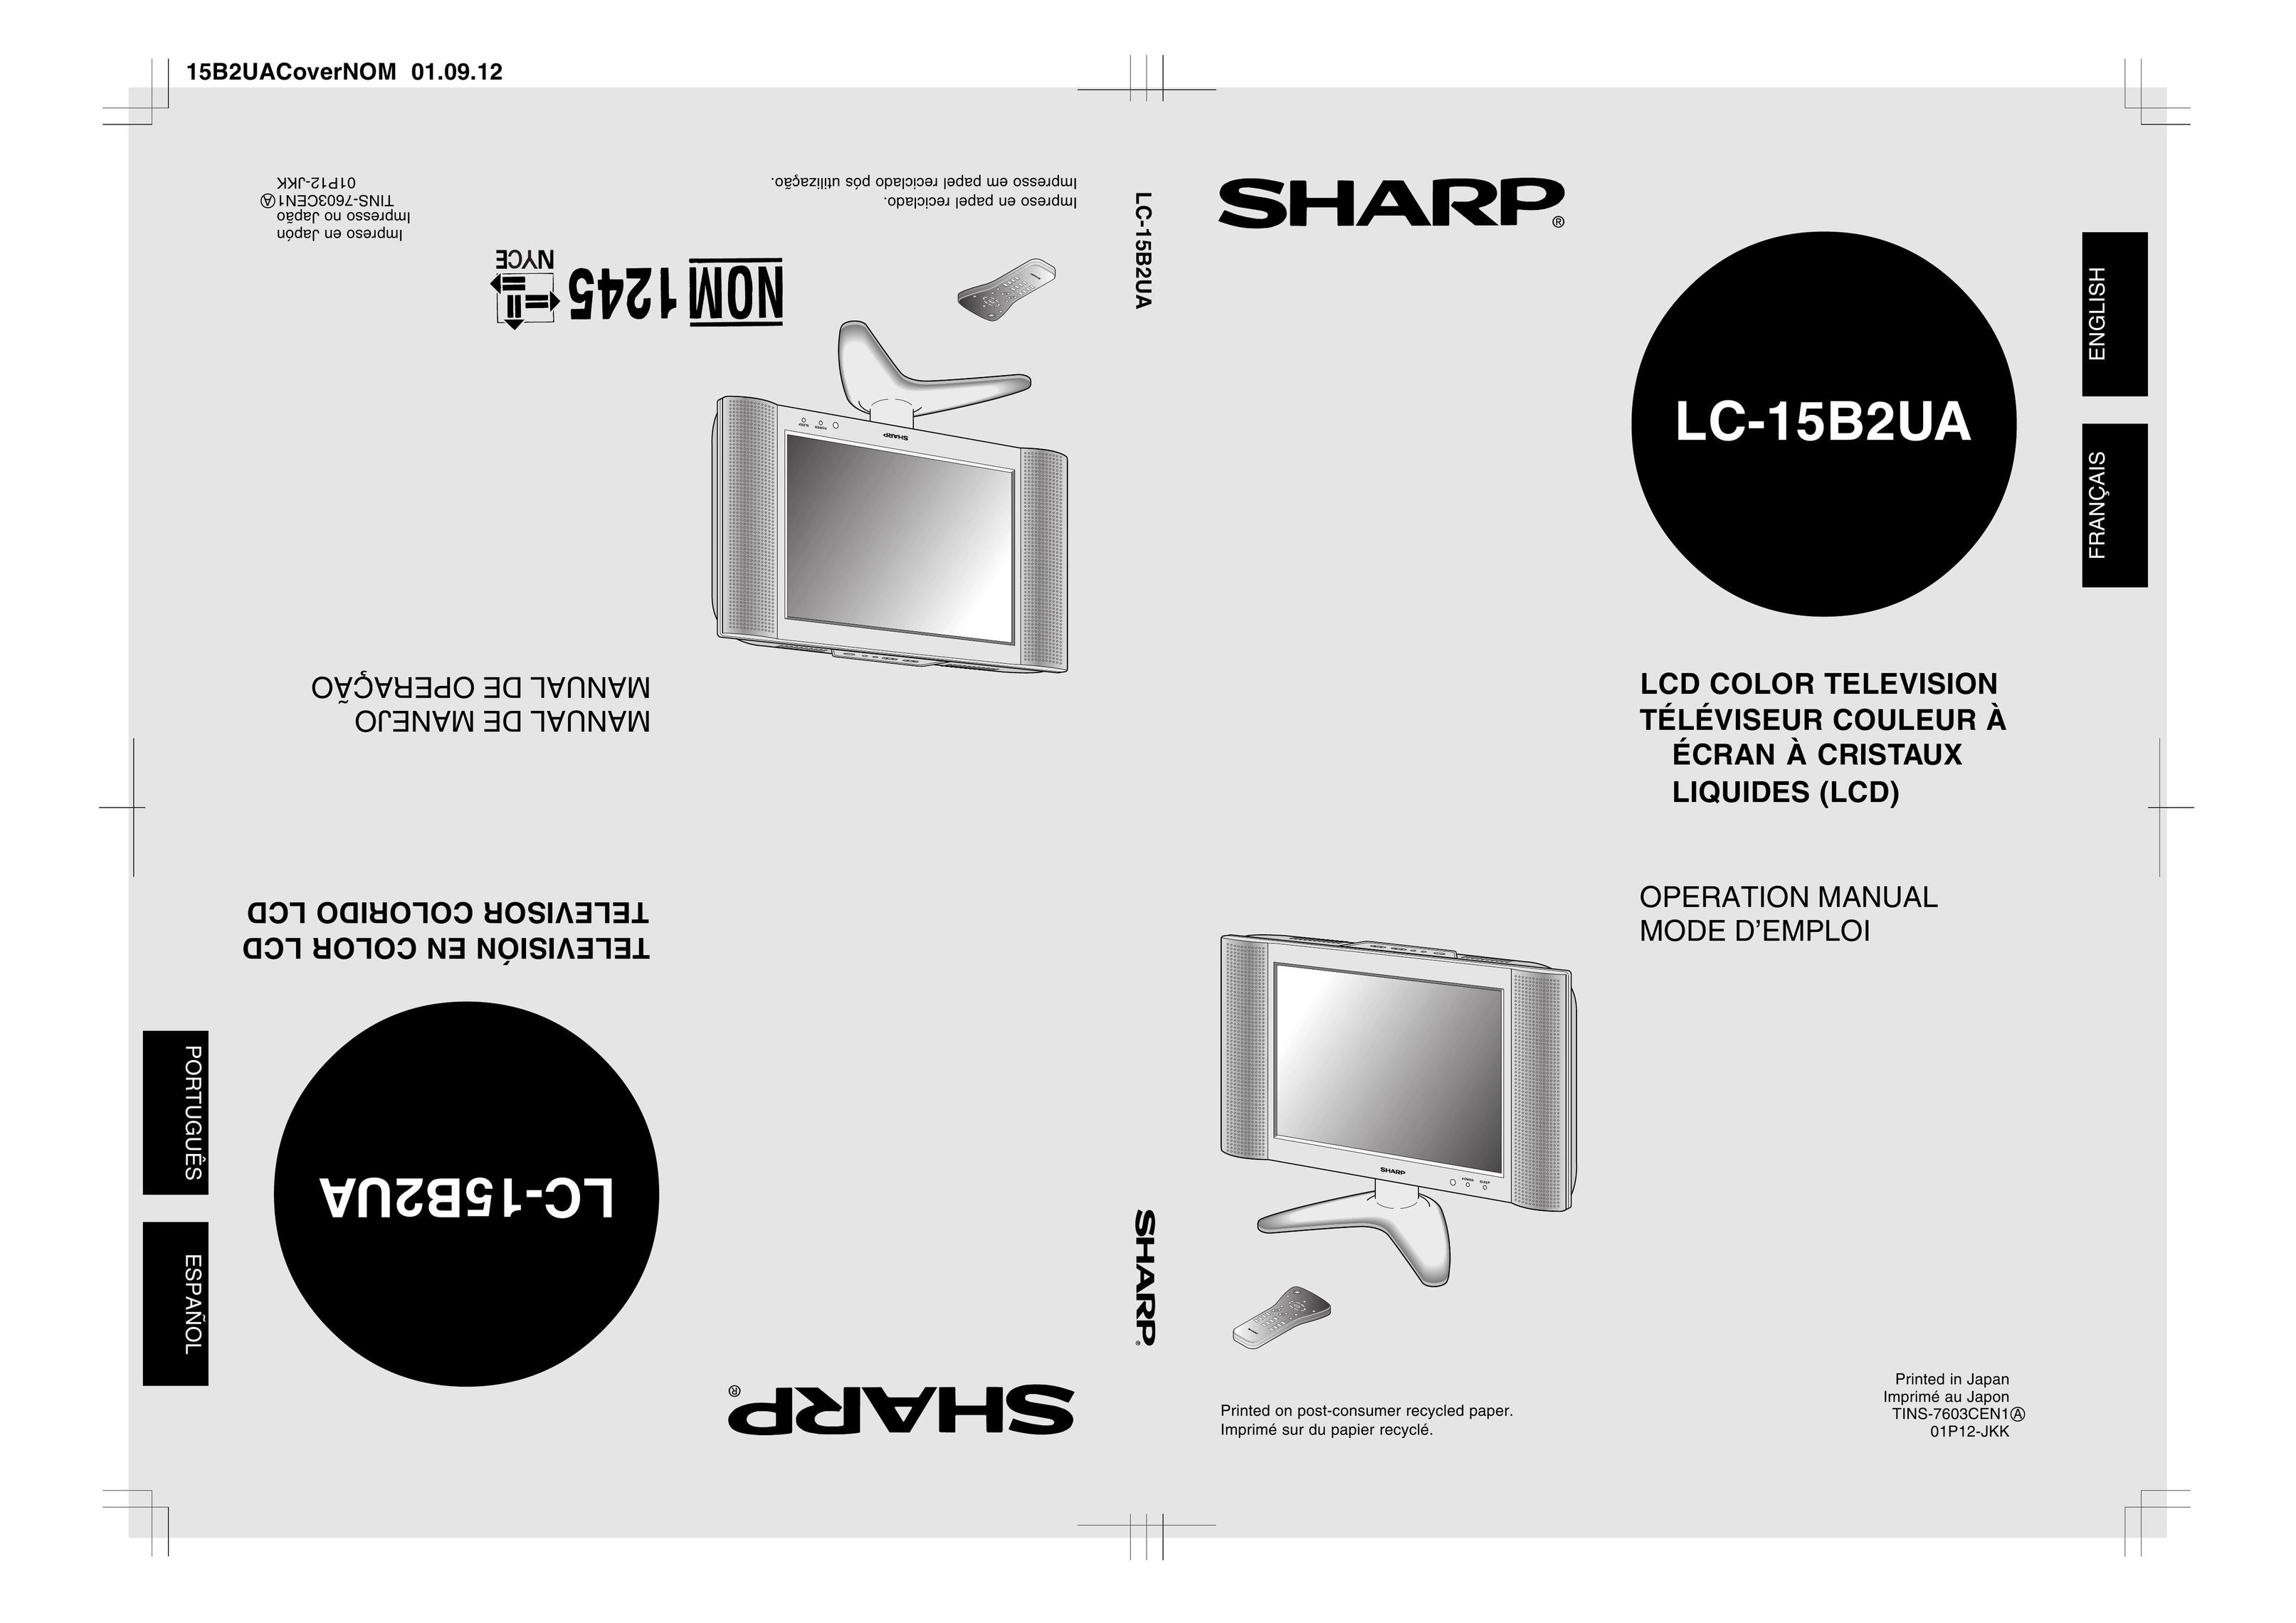 Sharp LC 15B2UA Flat Panel Television User Manual